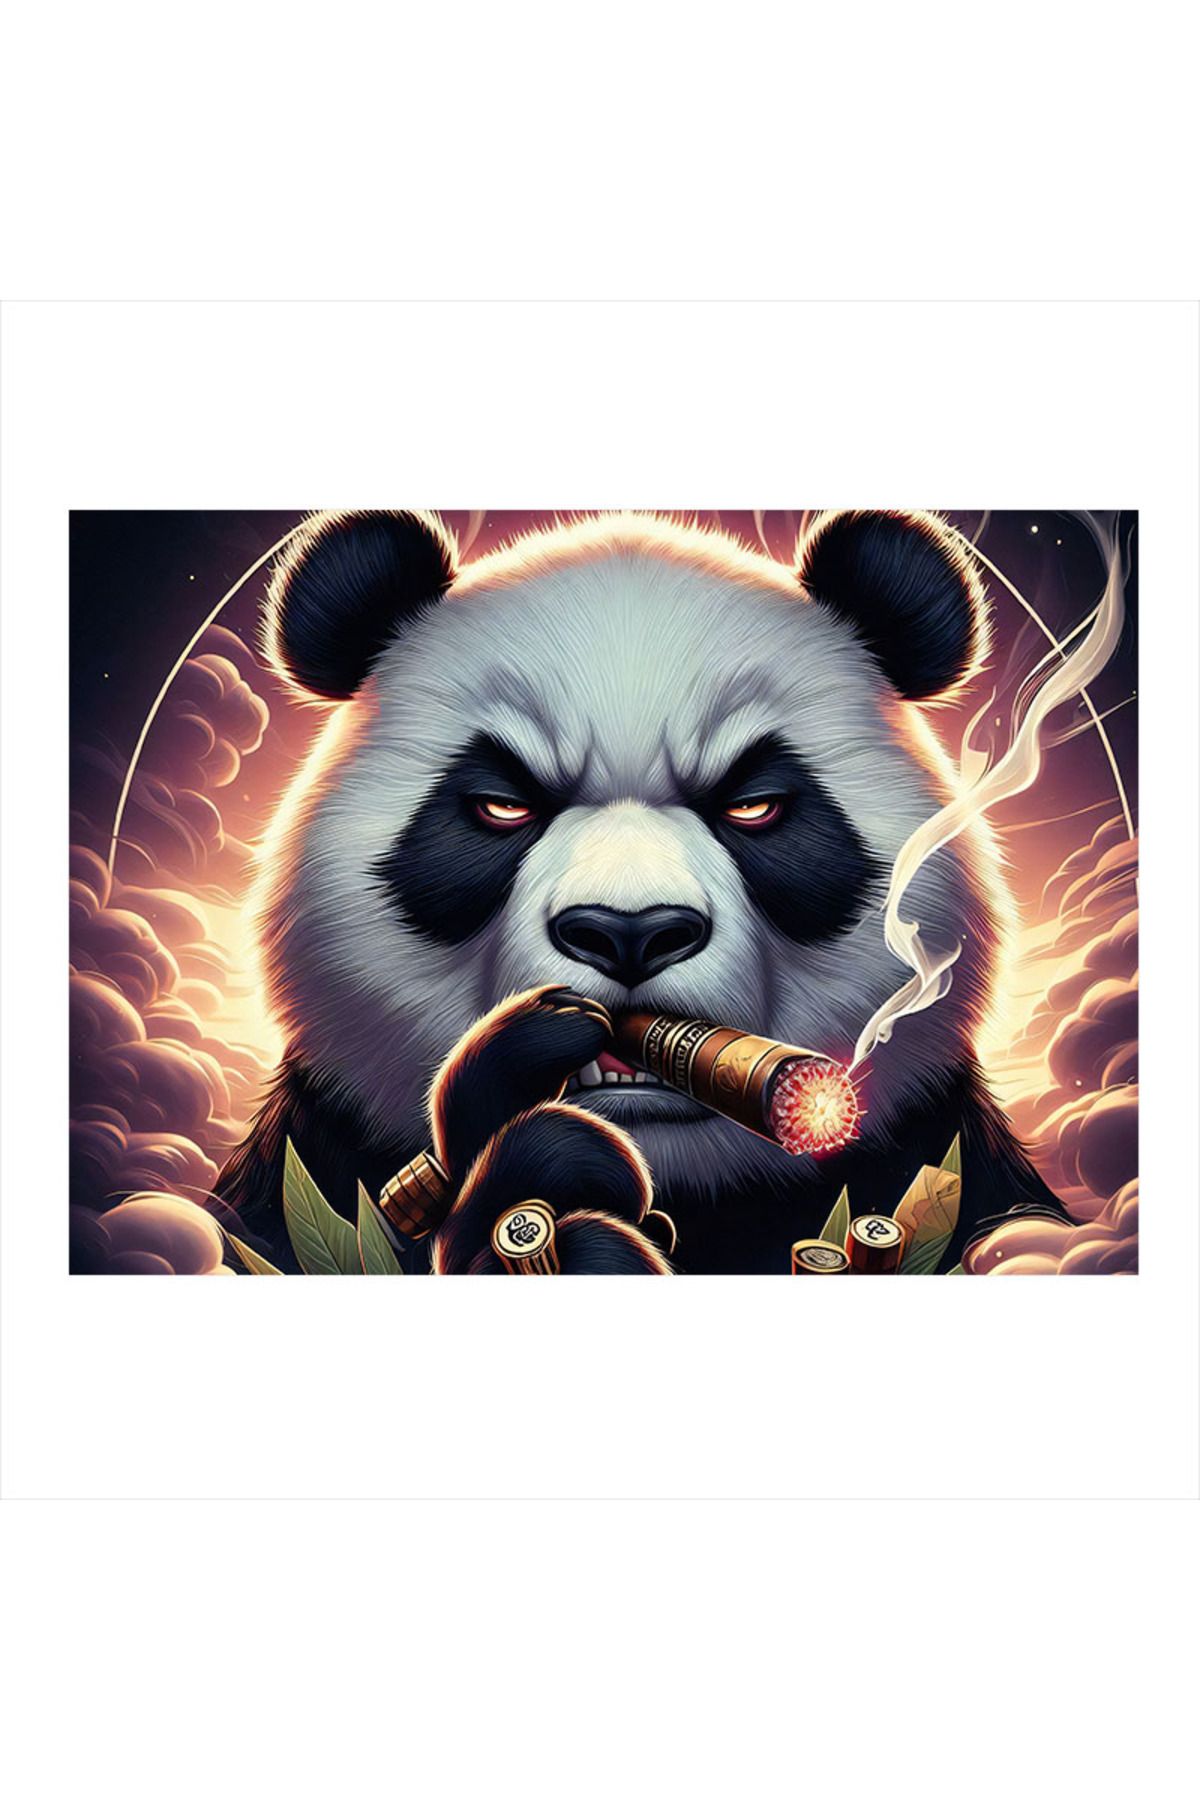 ekart Puro İçen Panda Art Mdf Poster 18cm X 27cm